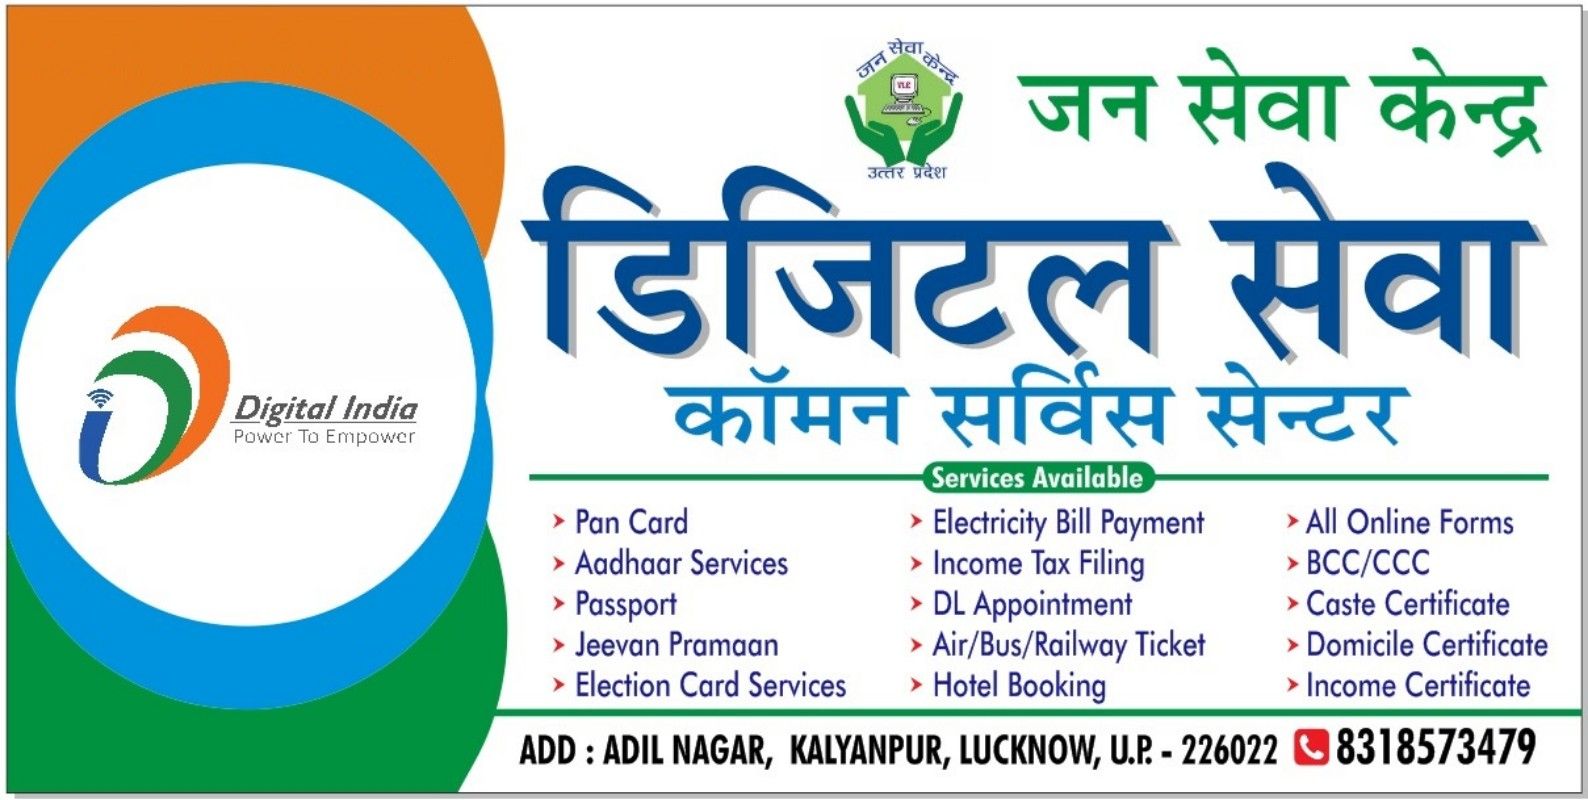 Authorized Common Centre From CSE in Nagpur | Rahi Digital Seva Kendra